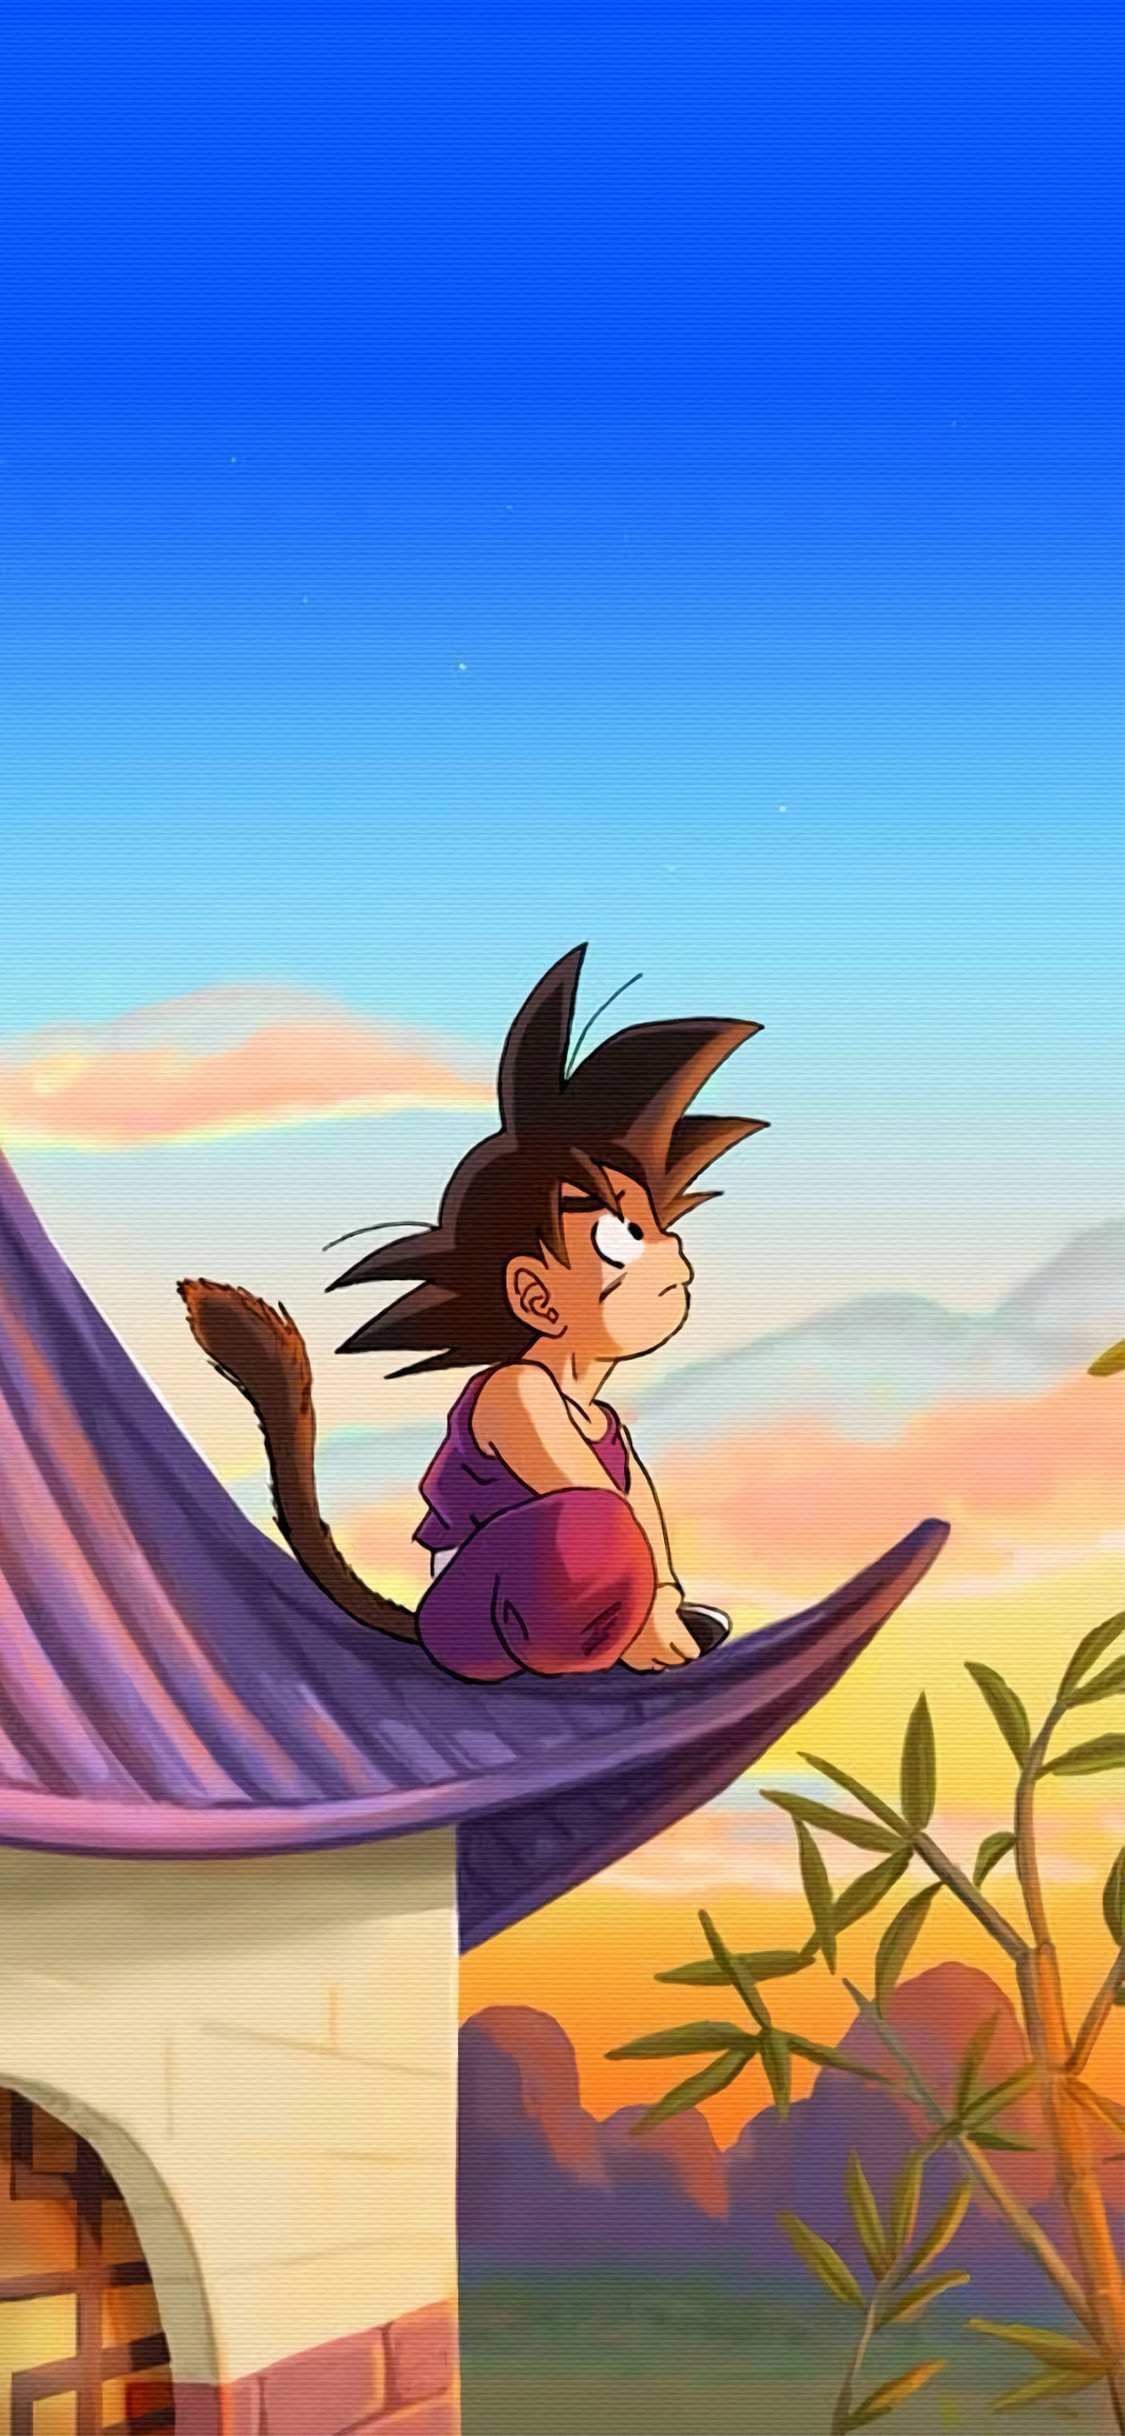 Wallpaper Goku Zamasu Dragon Ball Anime Anime Art Background   Download Free Image